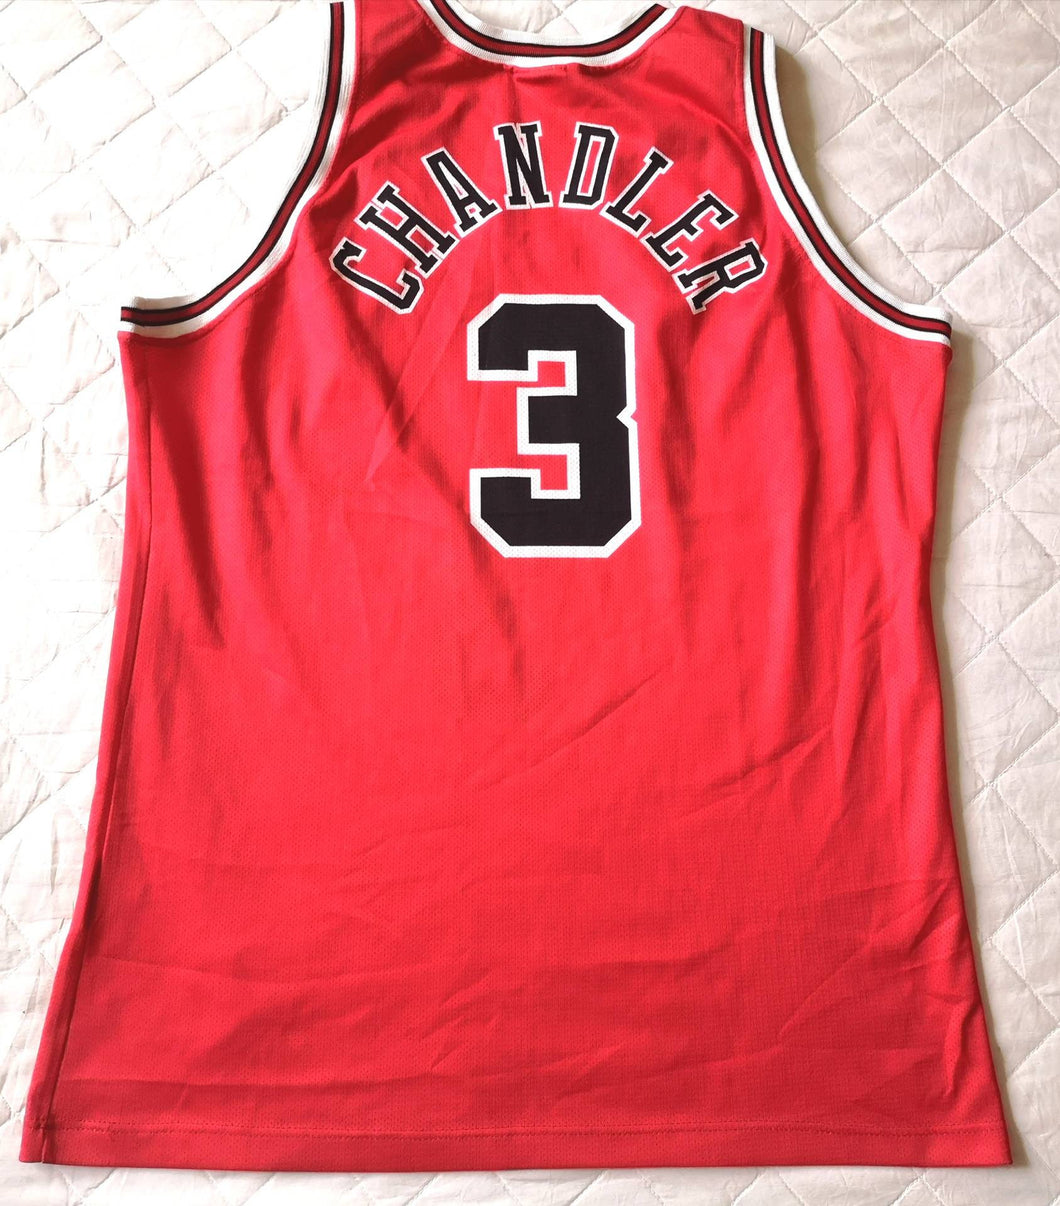 Vintage jersey Chandler Chicago Bullls NBA Champion